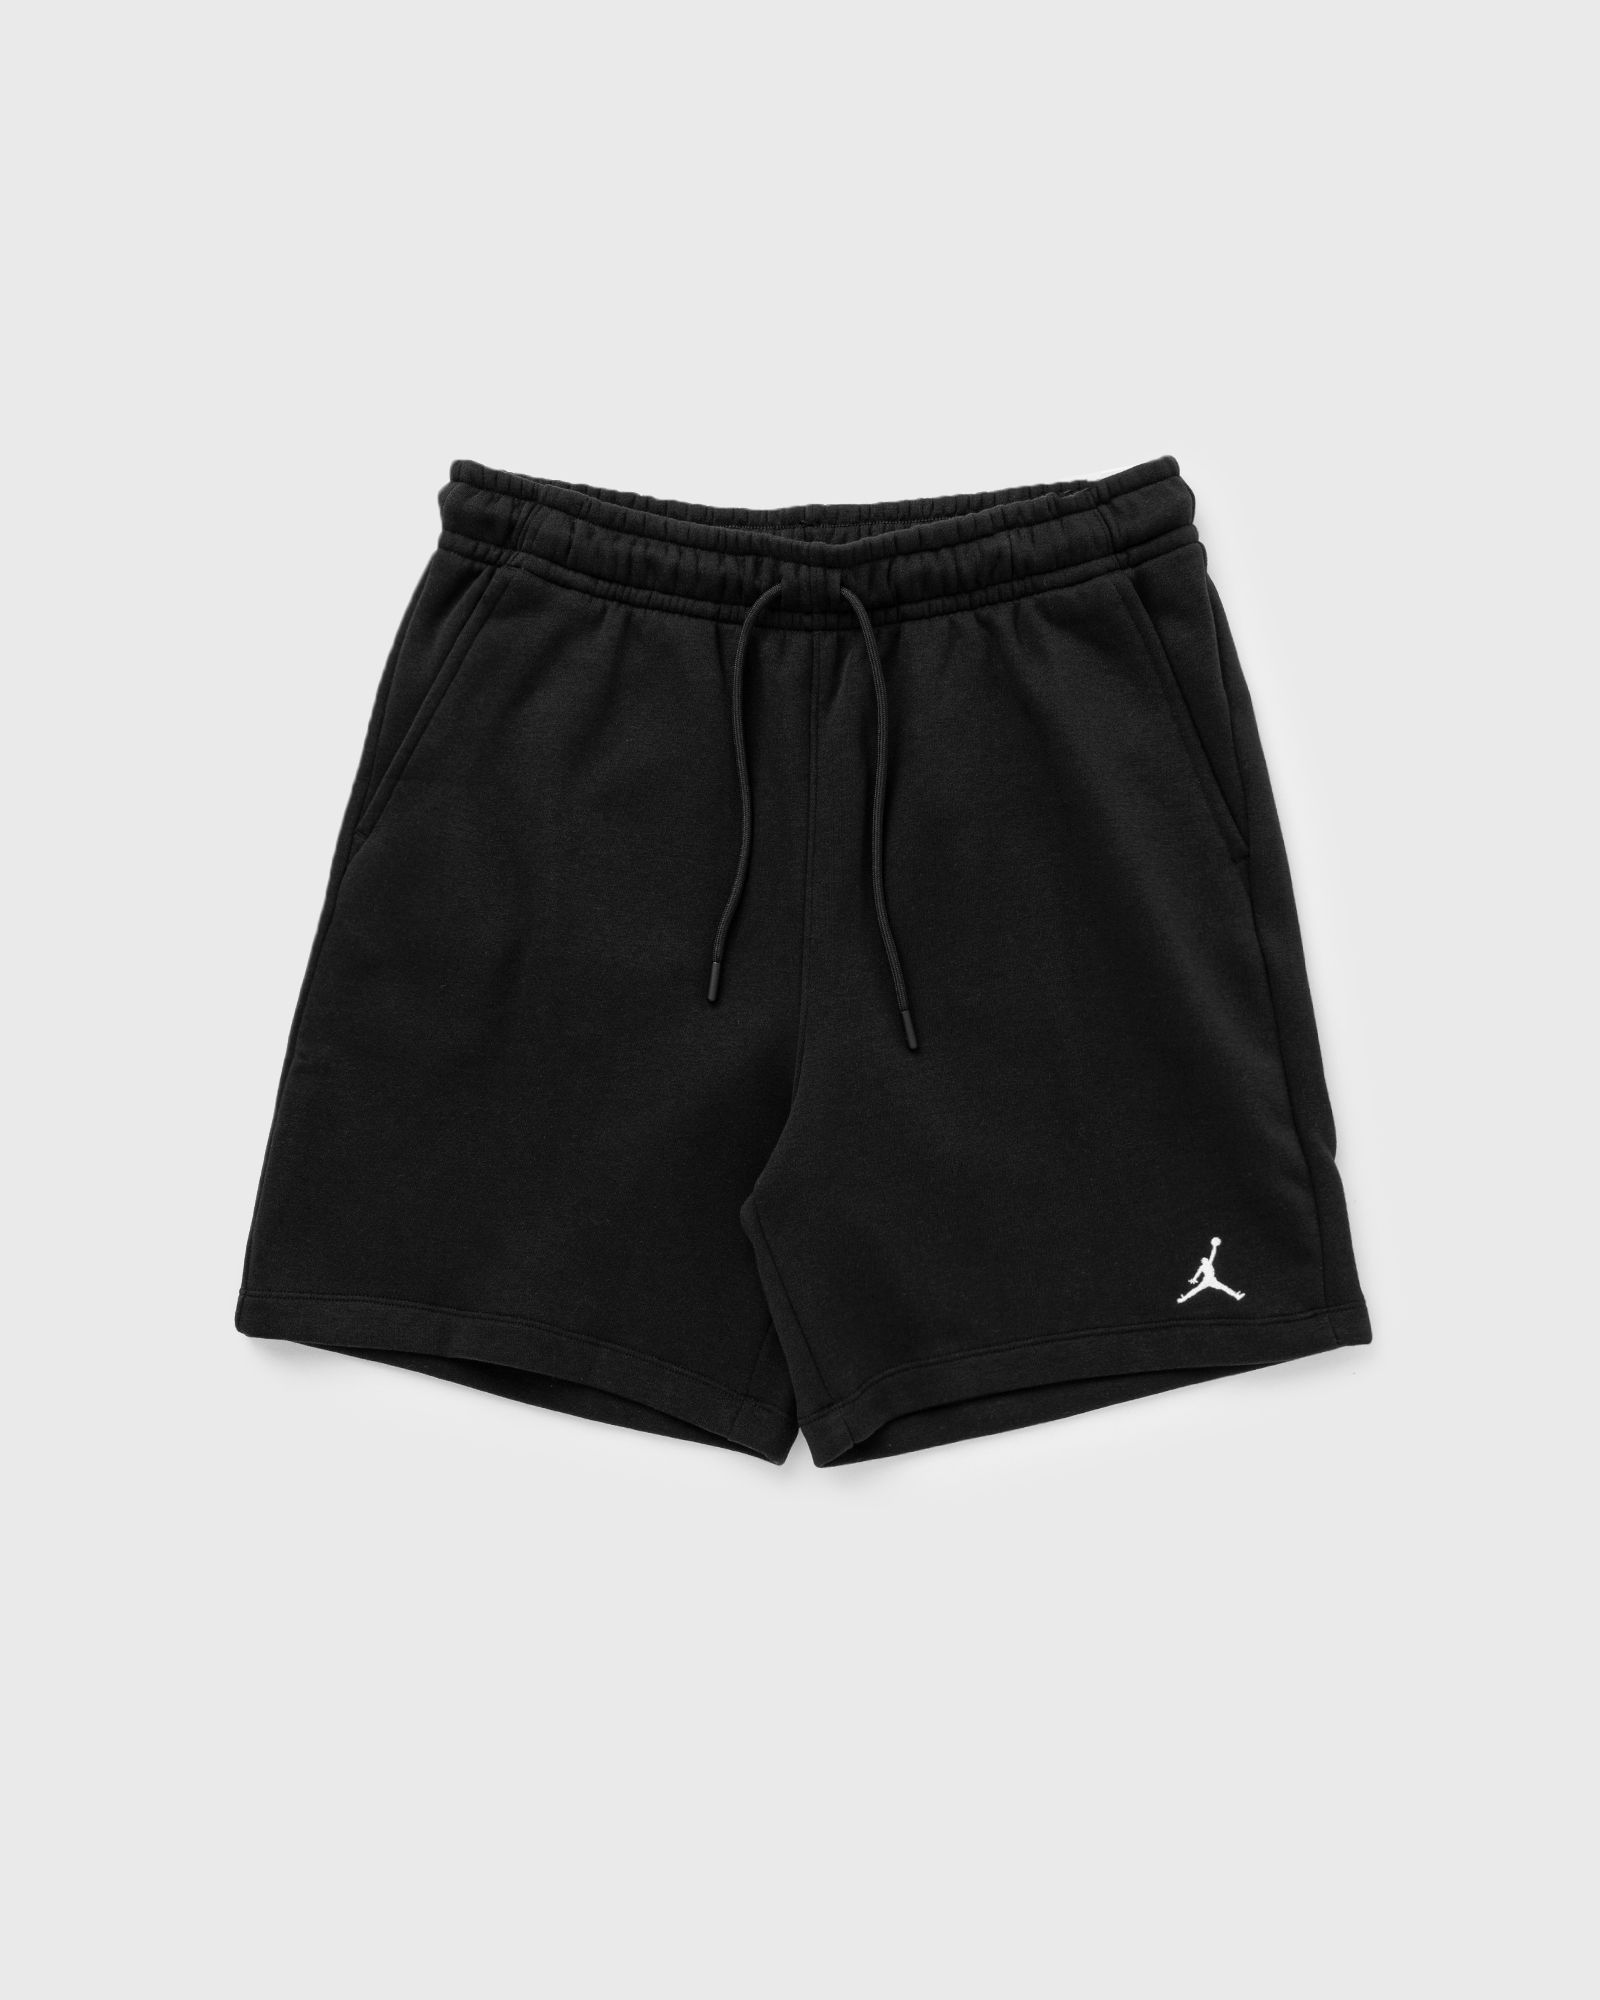 Jordan - essentials fleece shorts men sport & team shorts black in größe:xl